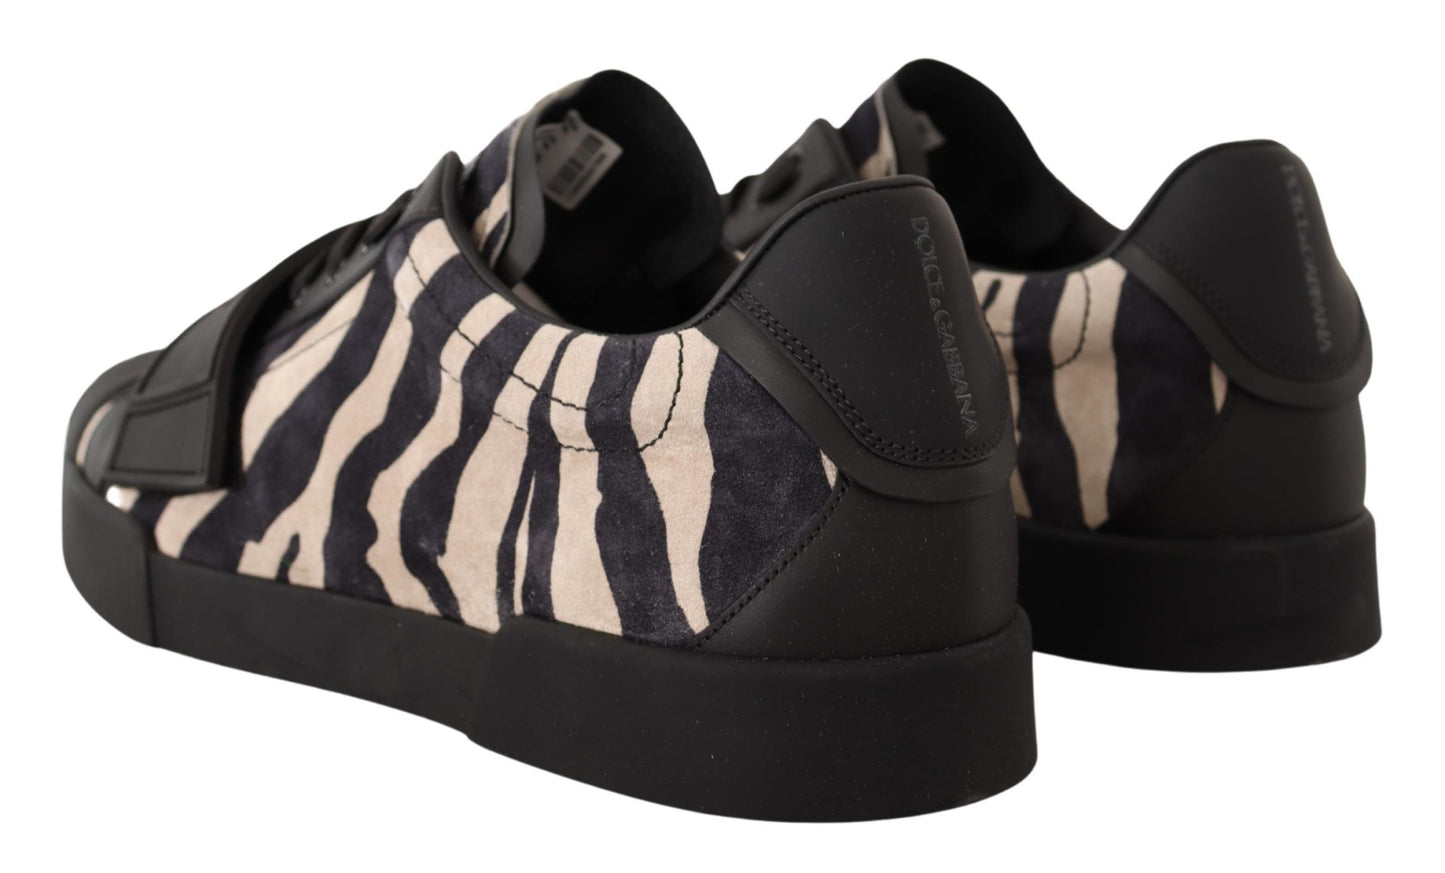 Zebra-Inspired Casual Low Top Sneakers